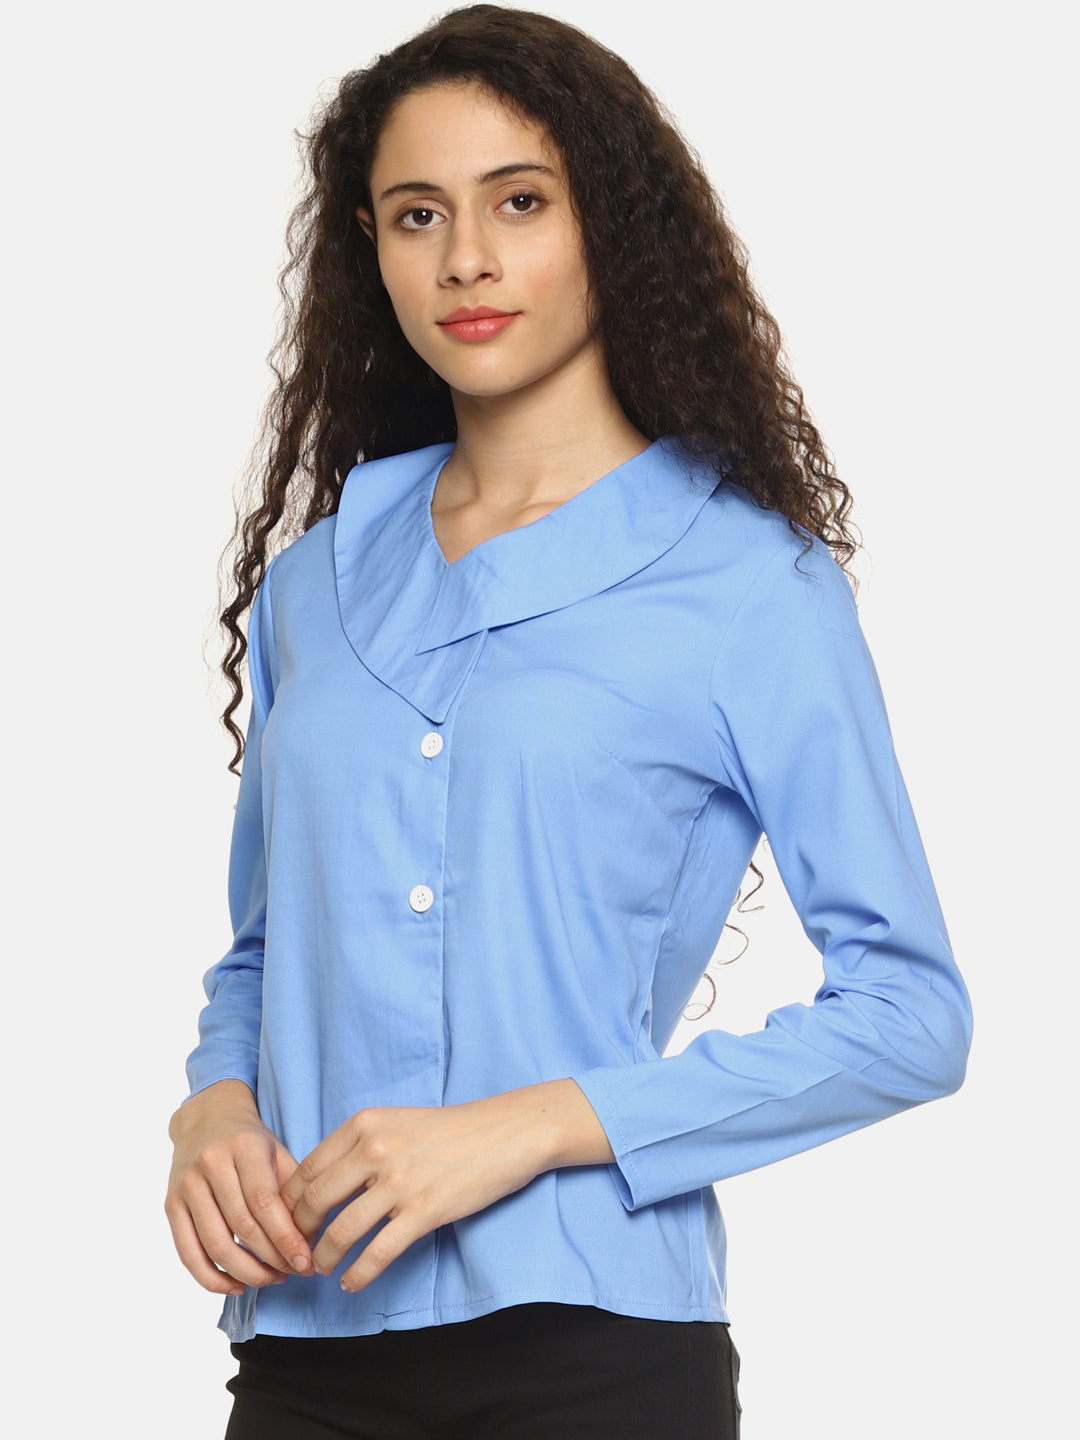 SAHORA Women sky blue solid collar shirt